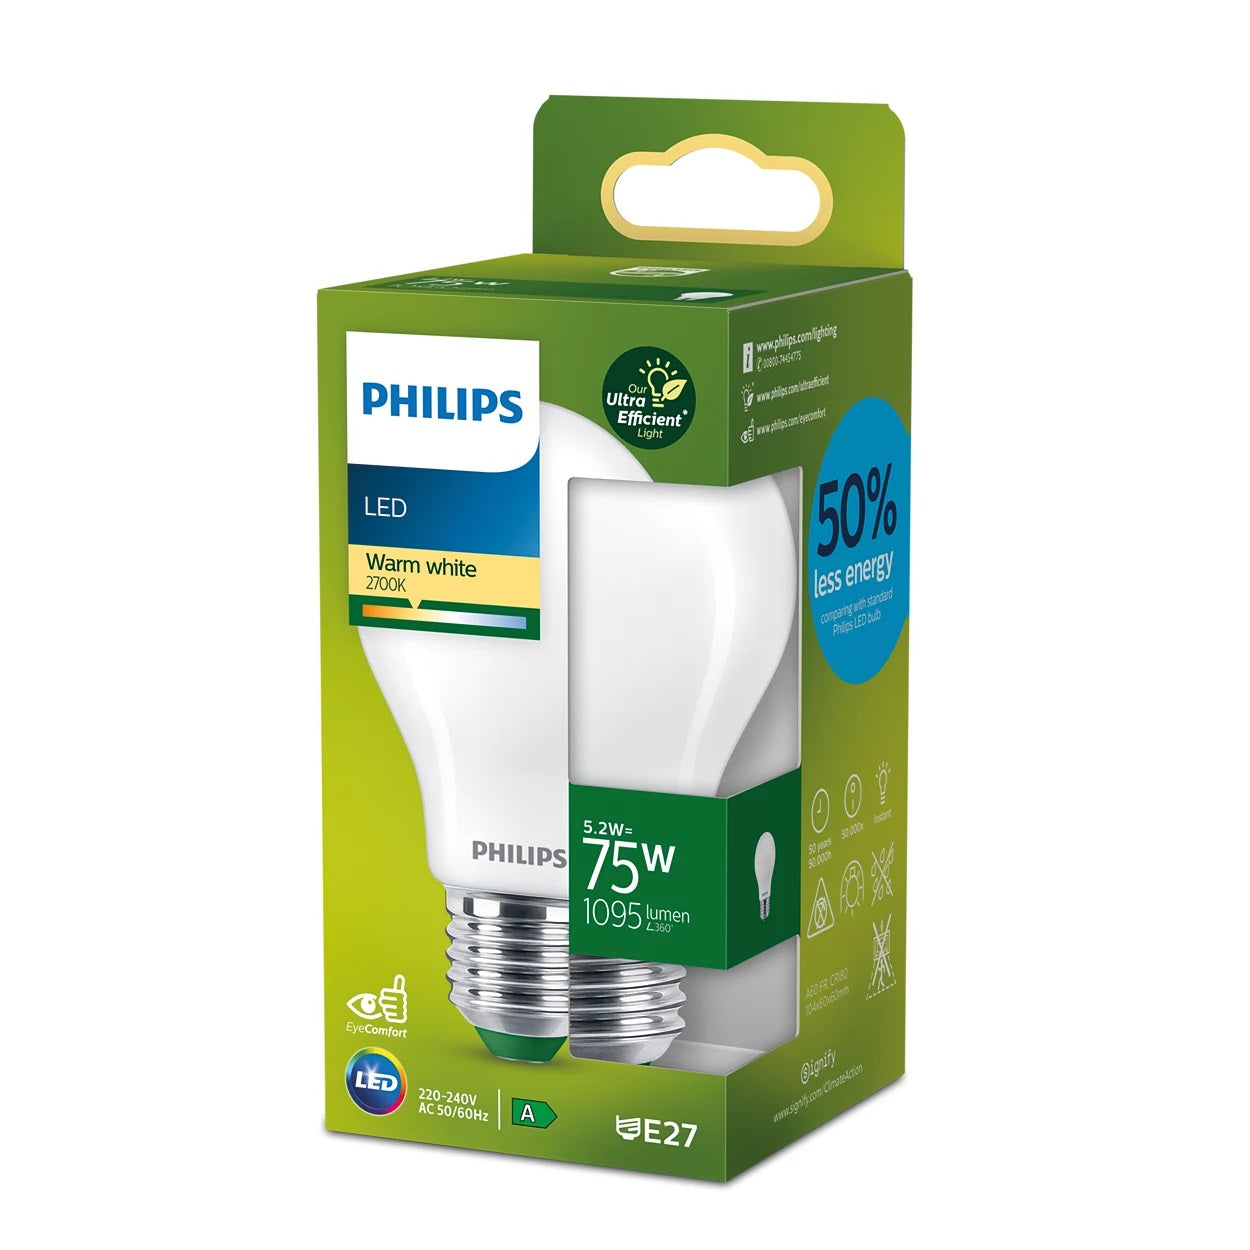 Philips Classic Filament LED bulb E27 CRI80 A-Class frosted 5.2-75W 2700K 1095lm